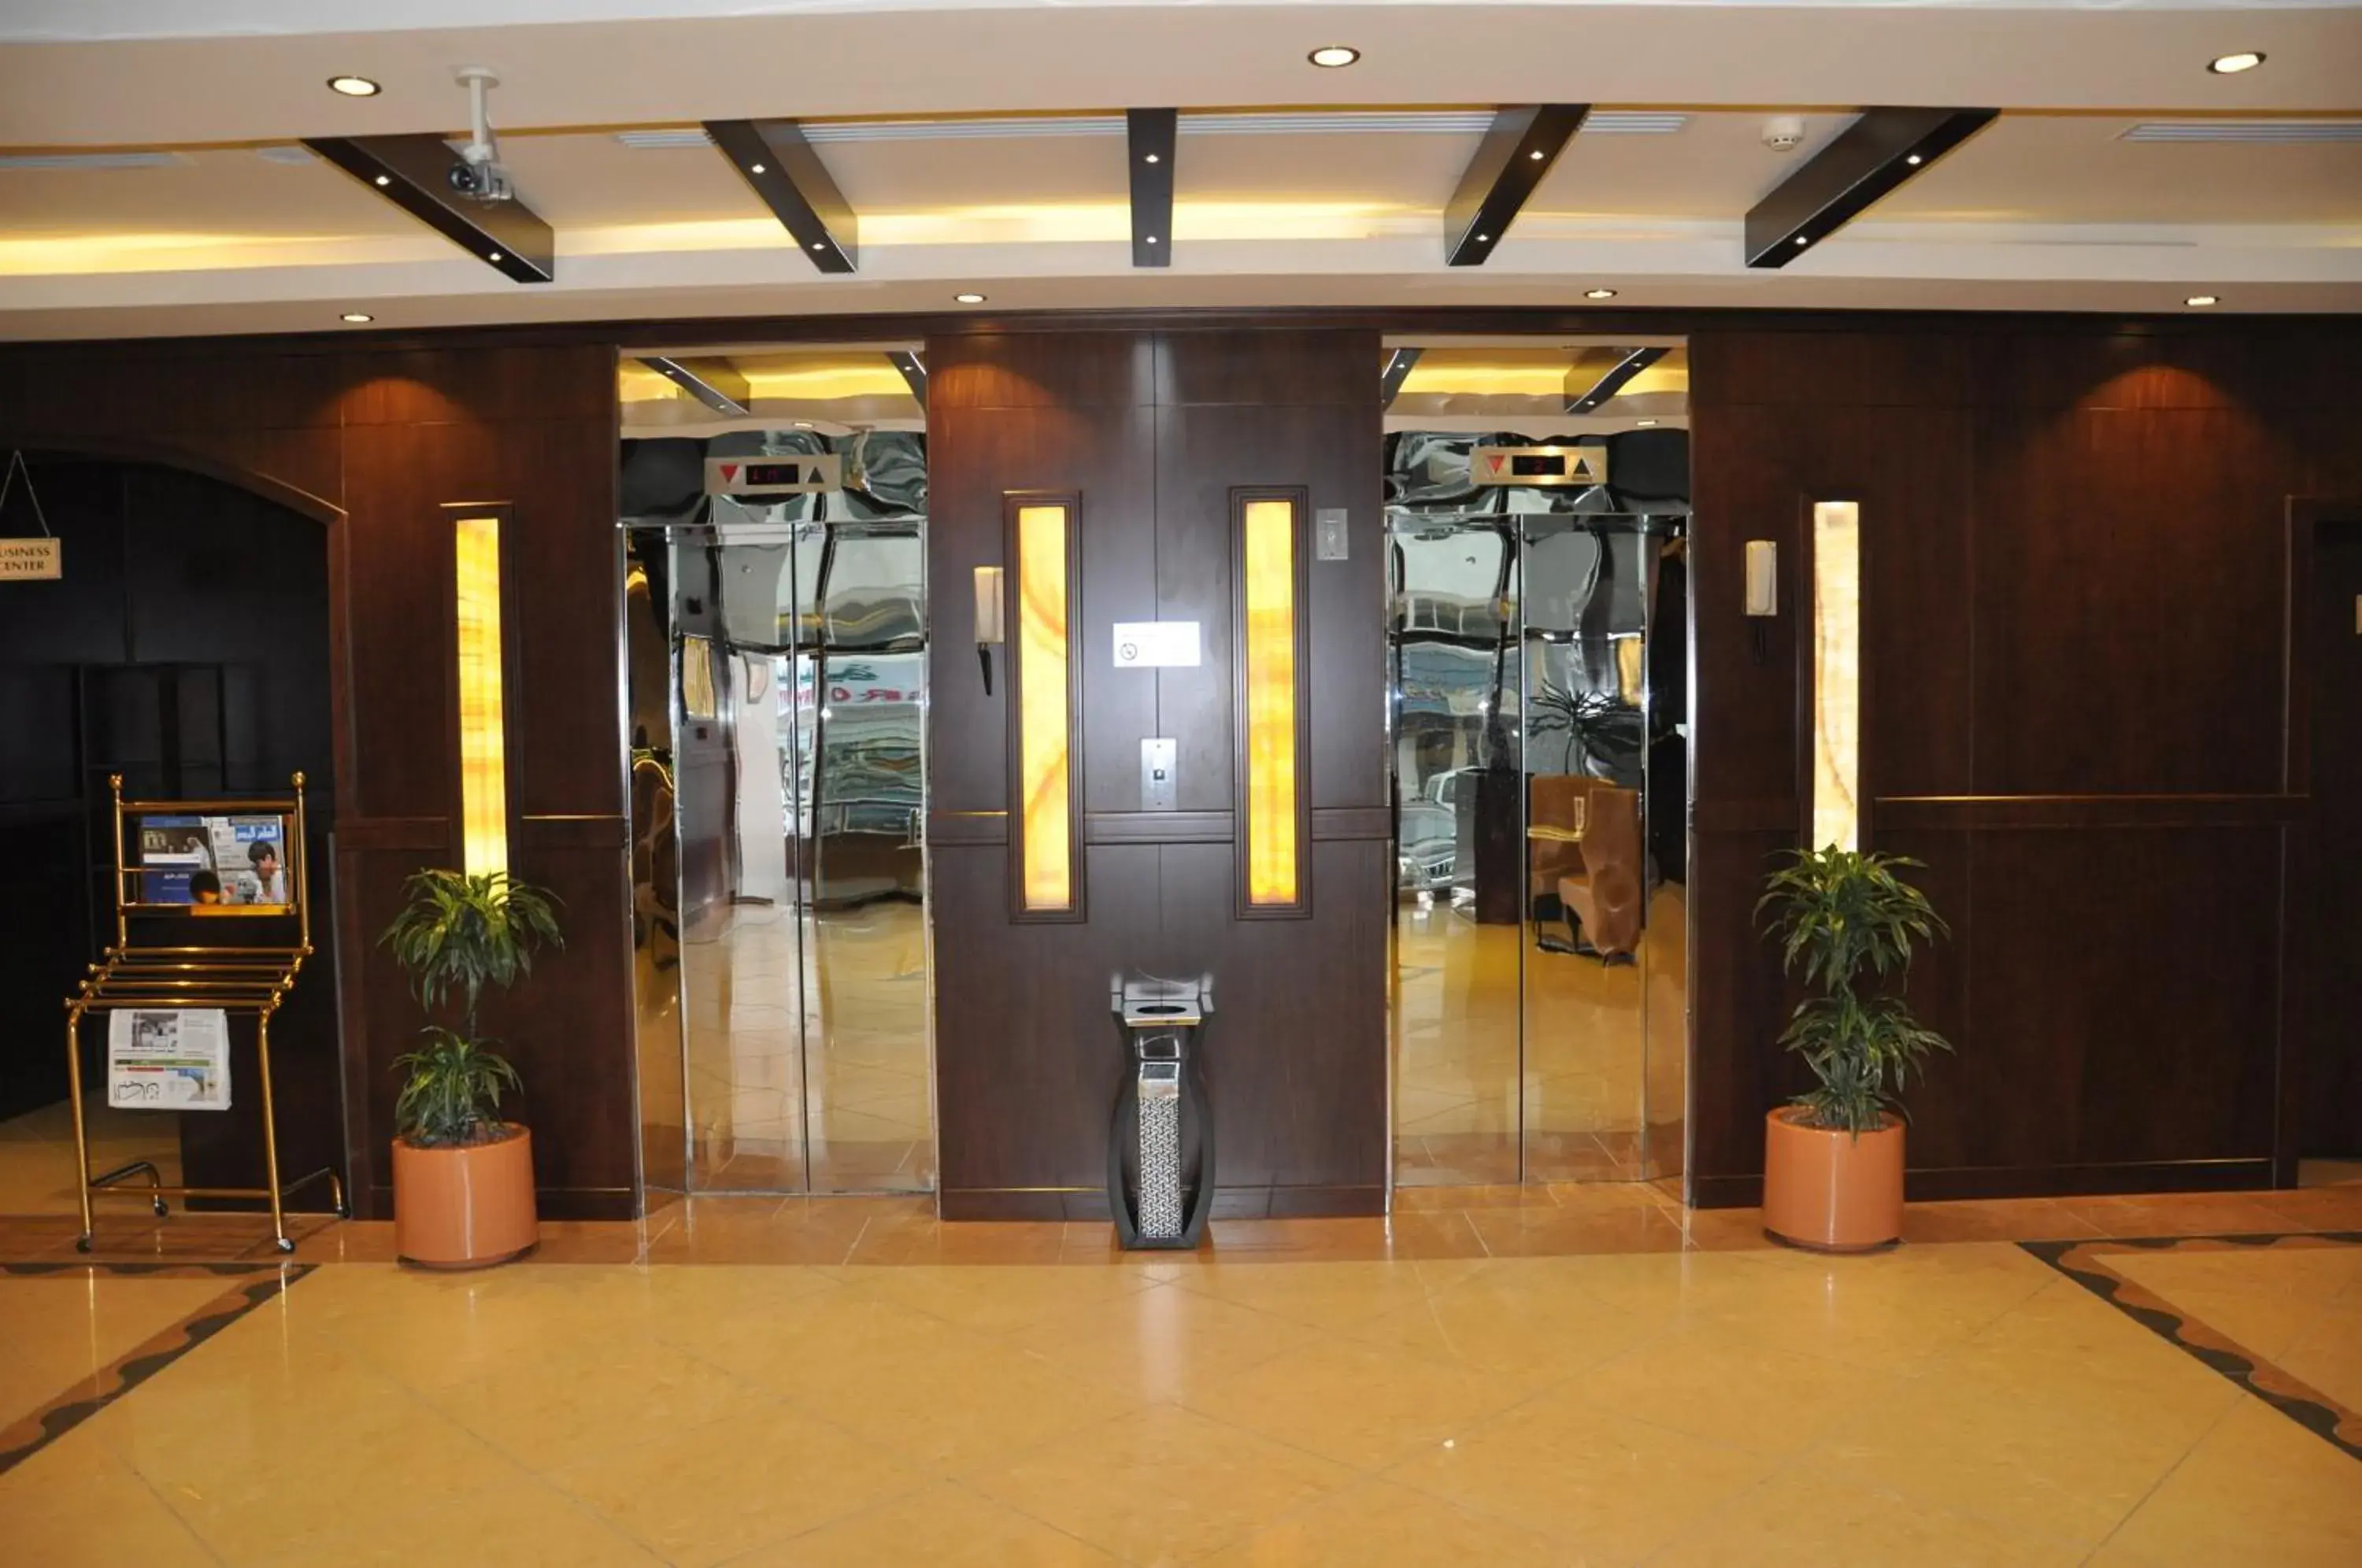 Lobby or reception in Fortune Plaza Hotel, Dubai Airport